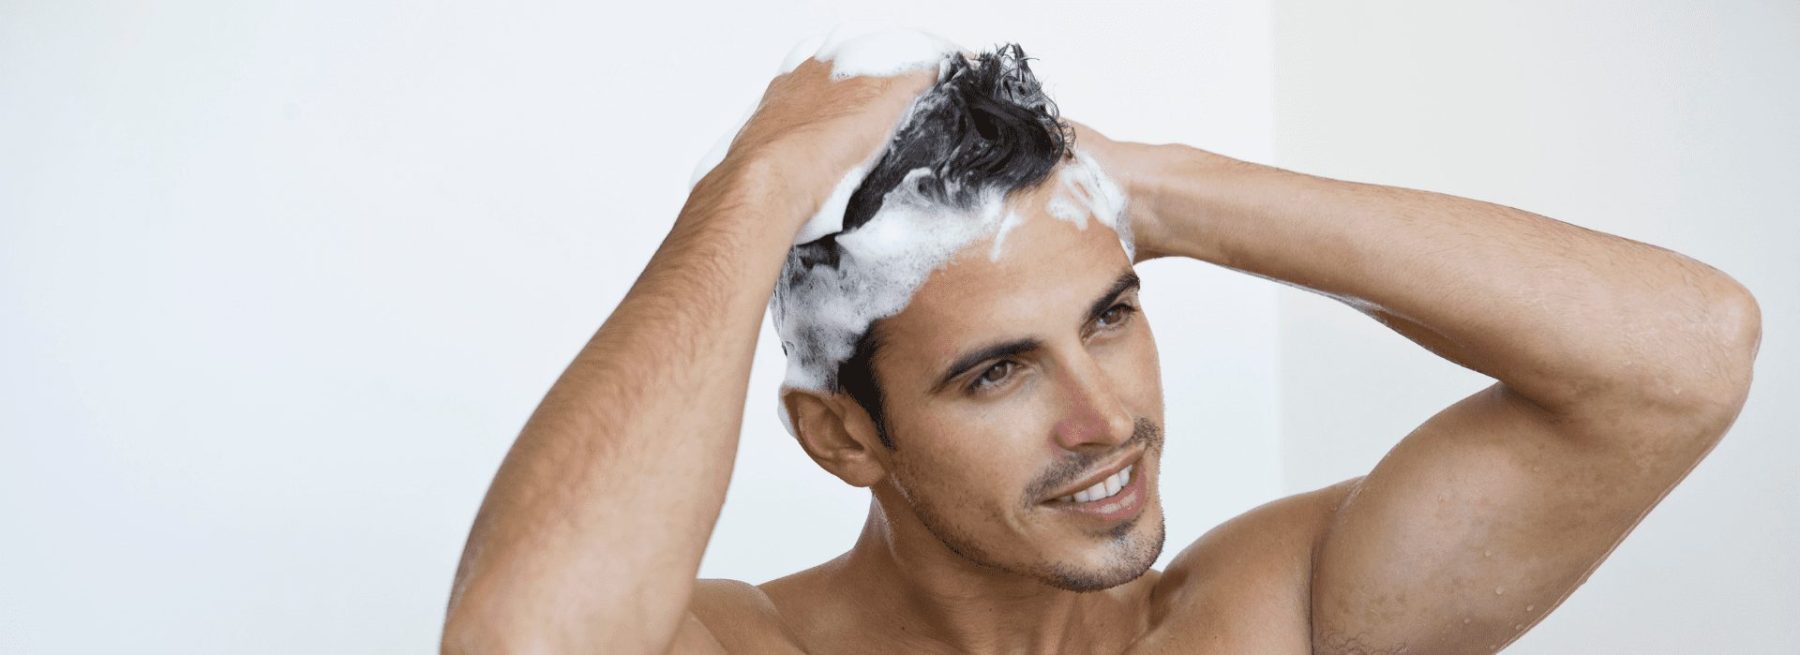 shampoo and washing a hair post hair transplant treatment